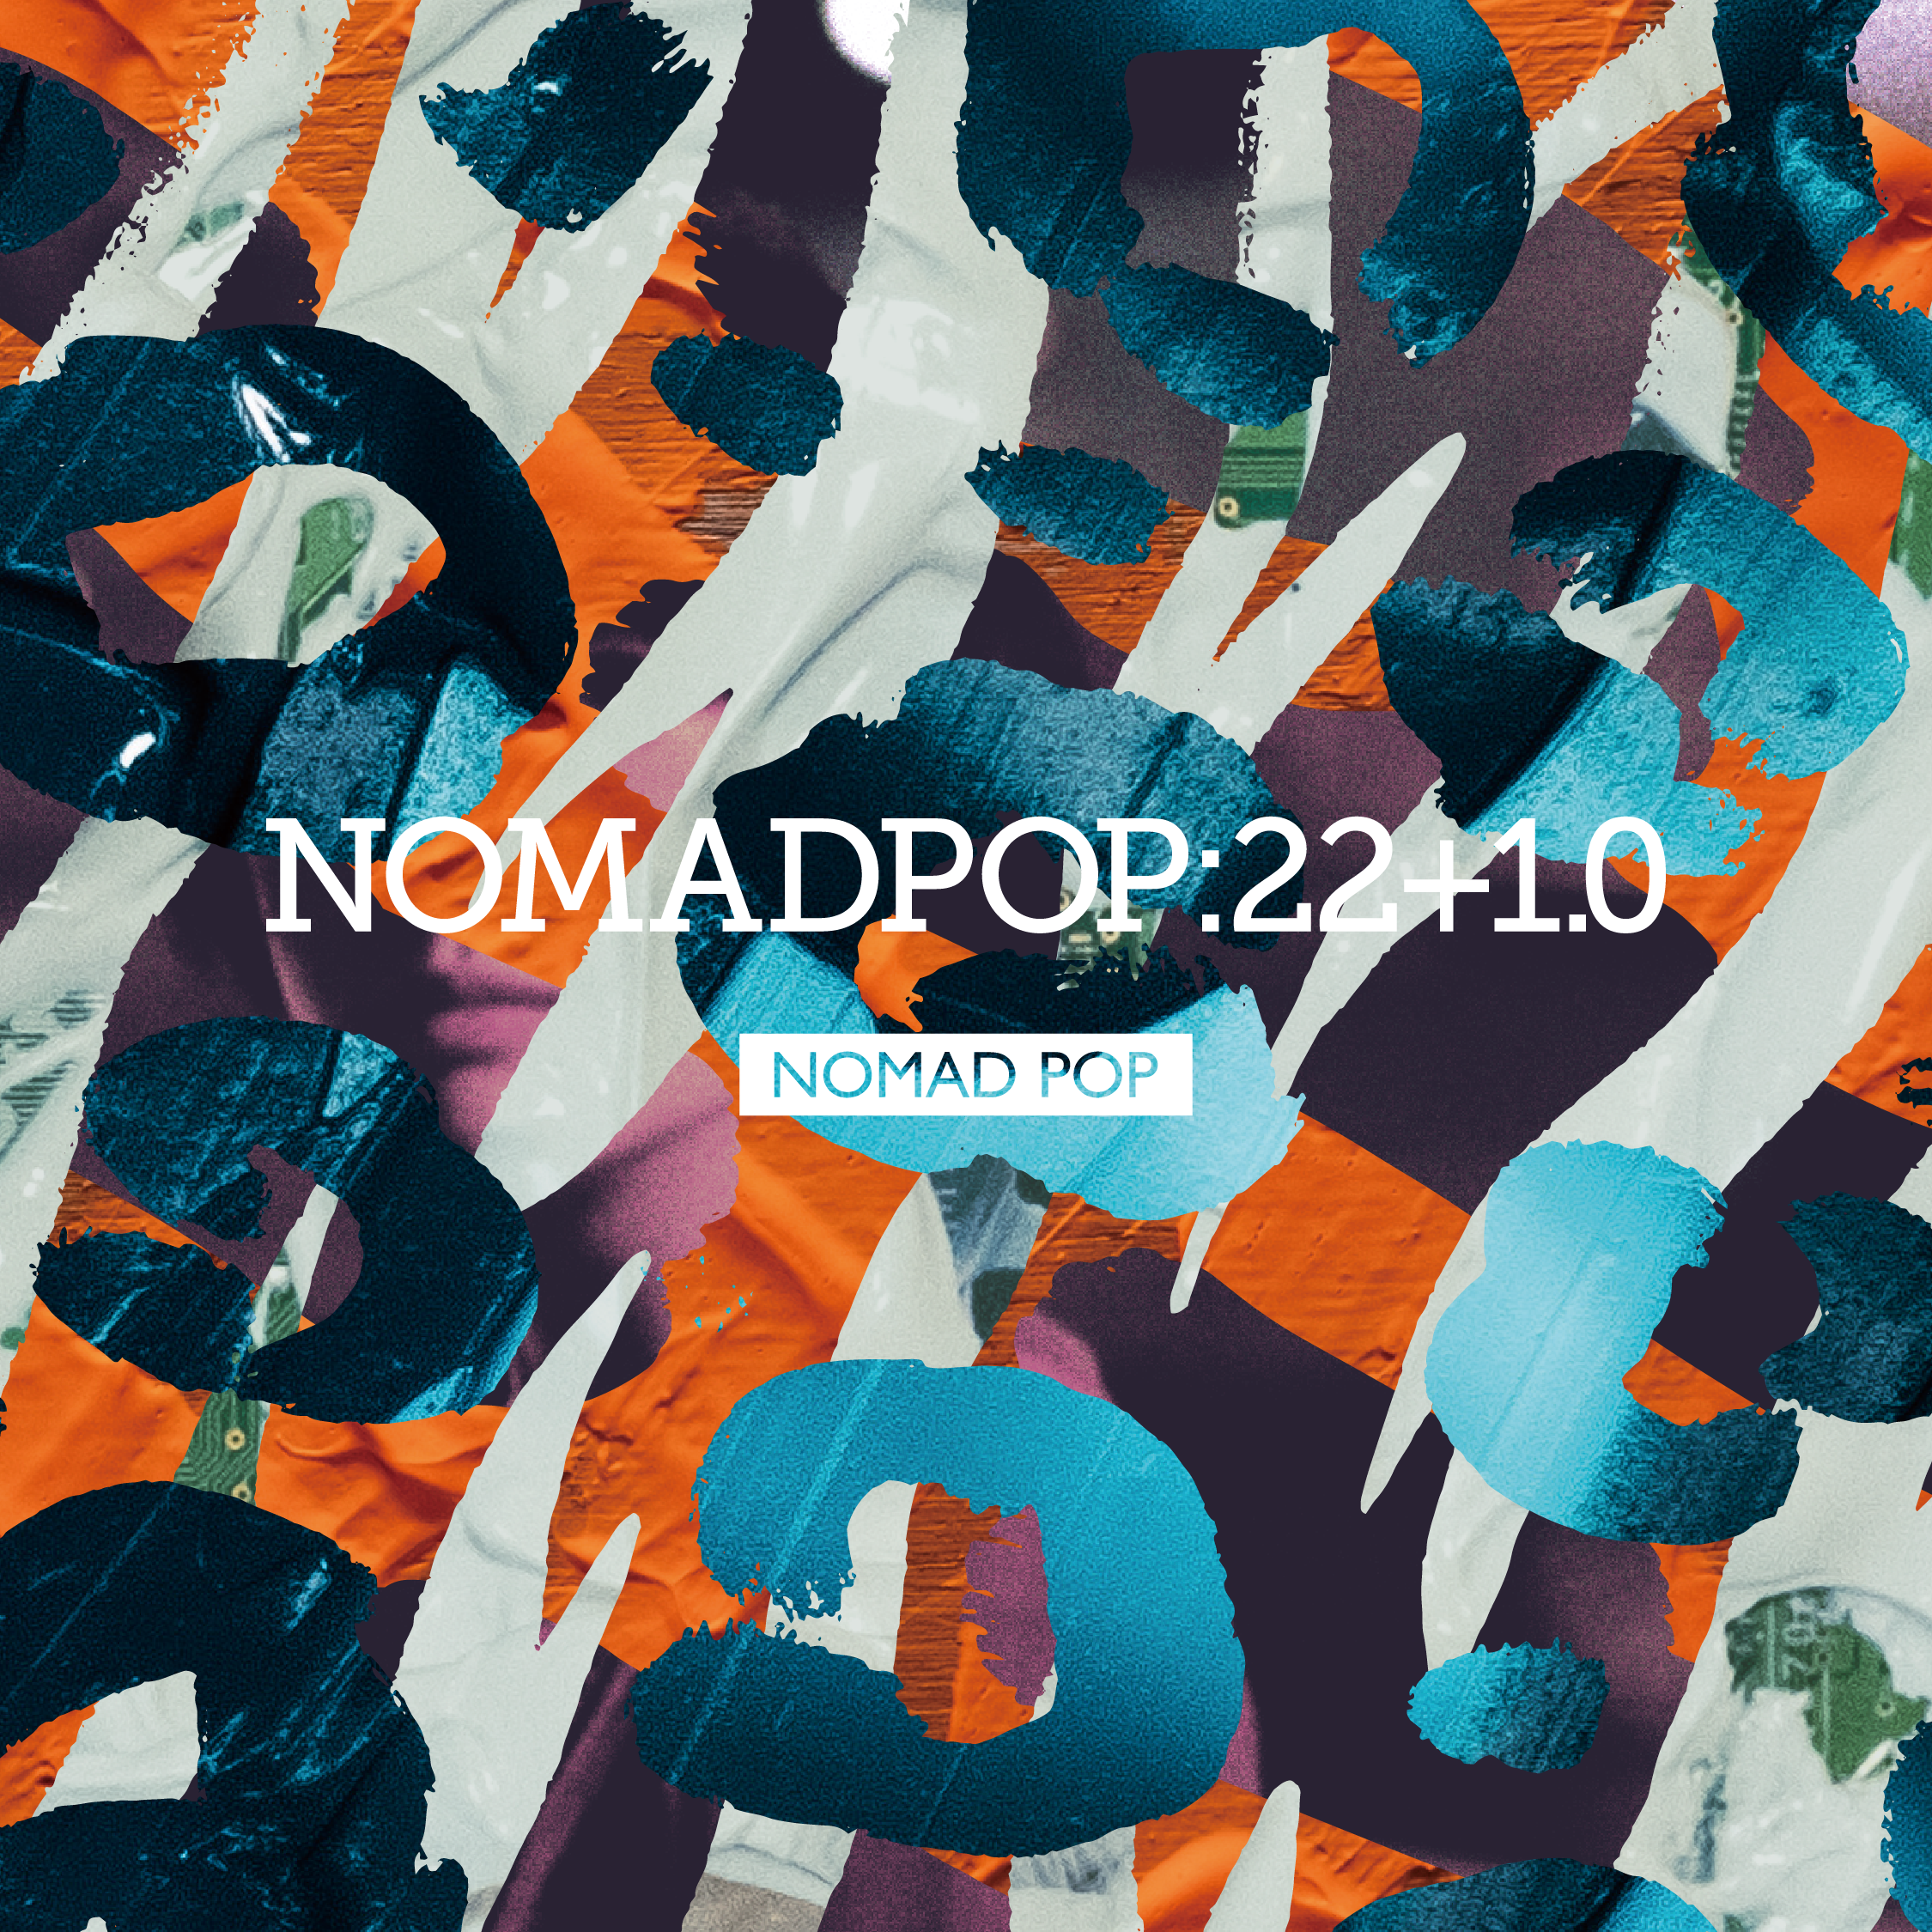 221 ライブ会場限定盤『NOMADPOP:22+1.0』販売